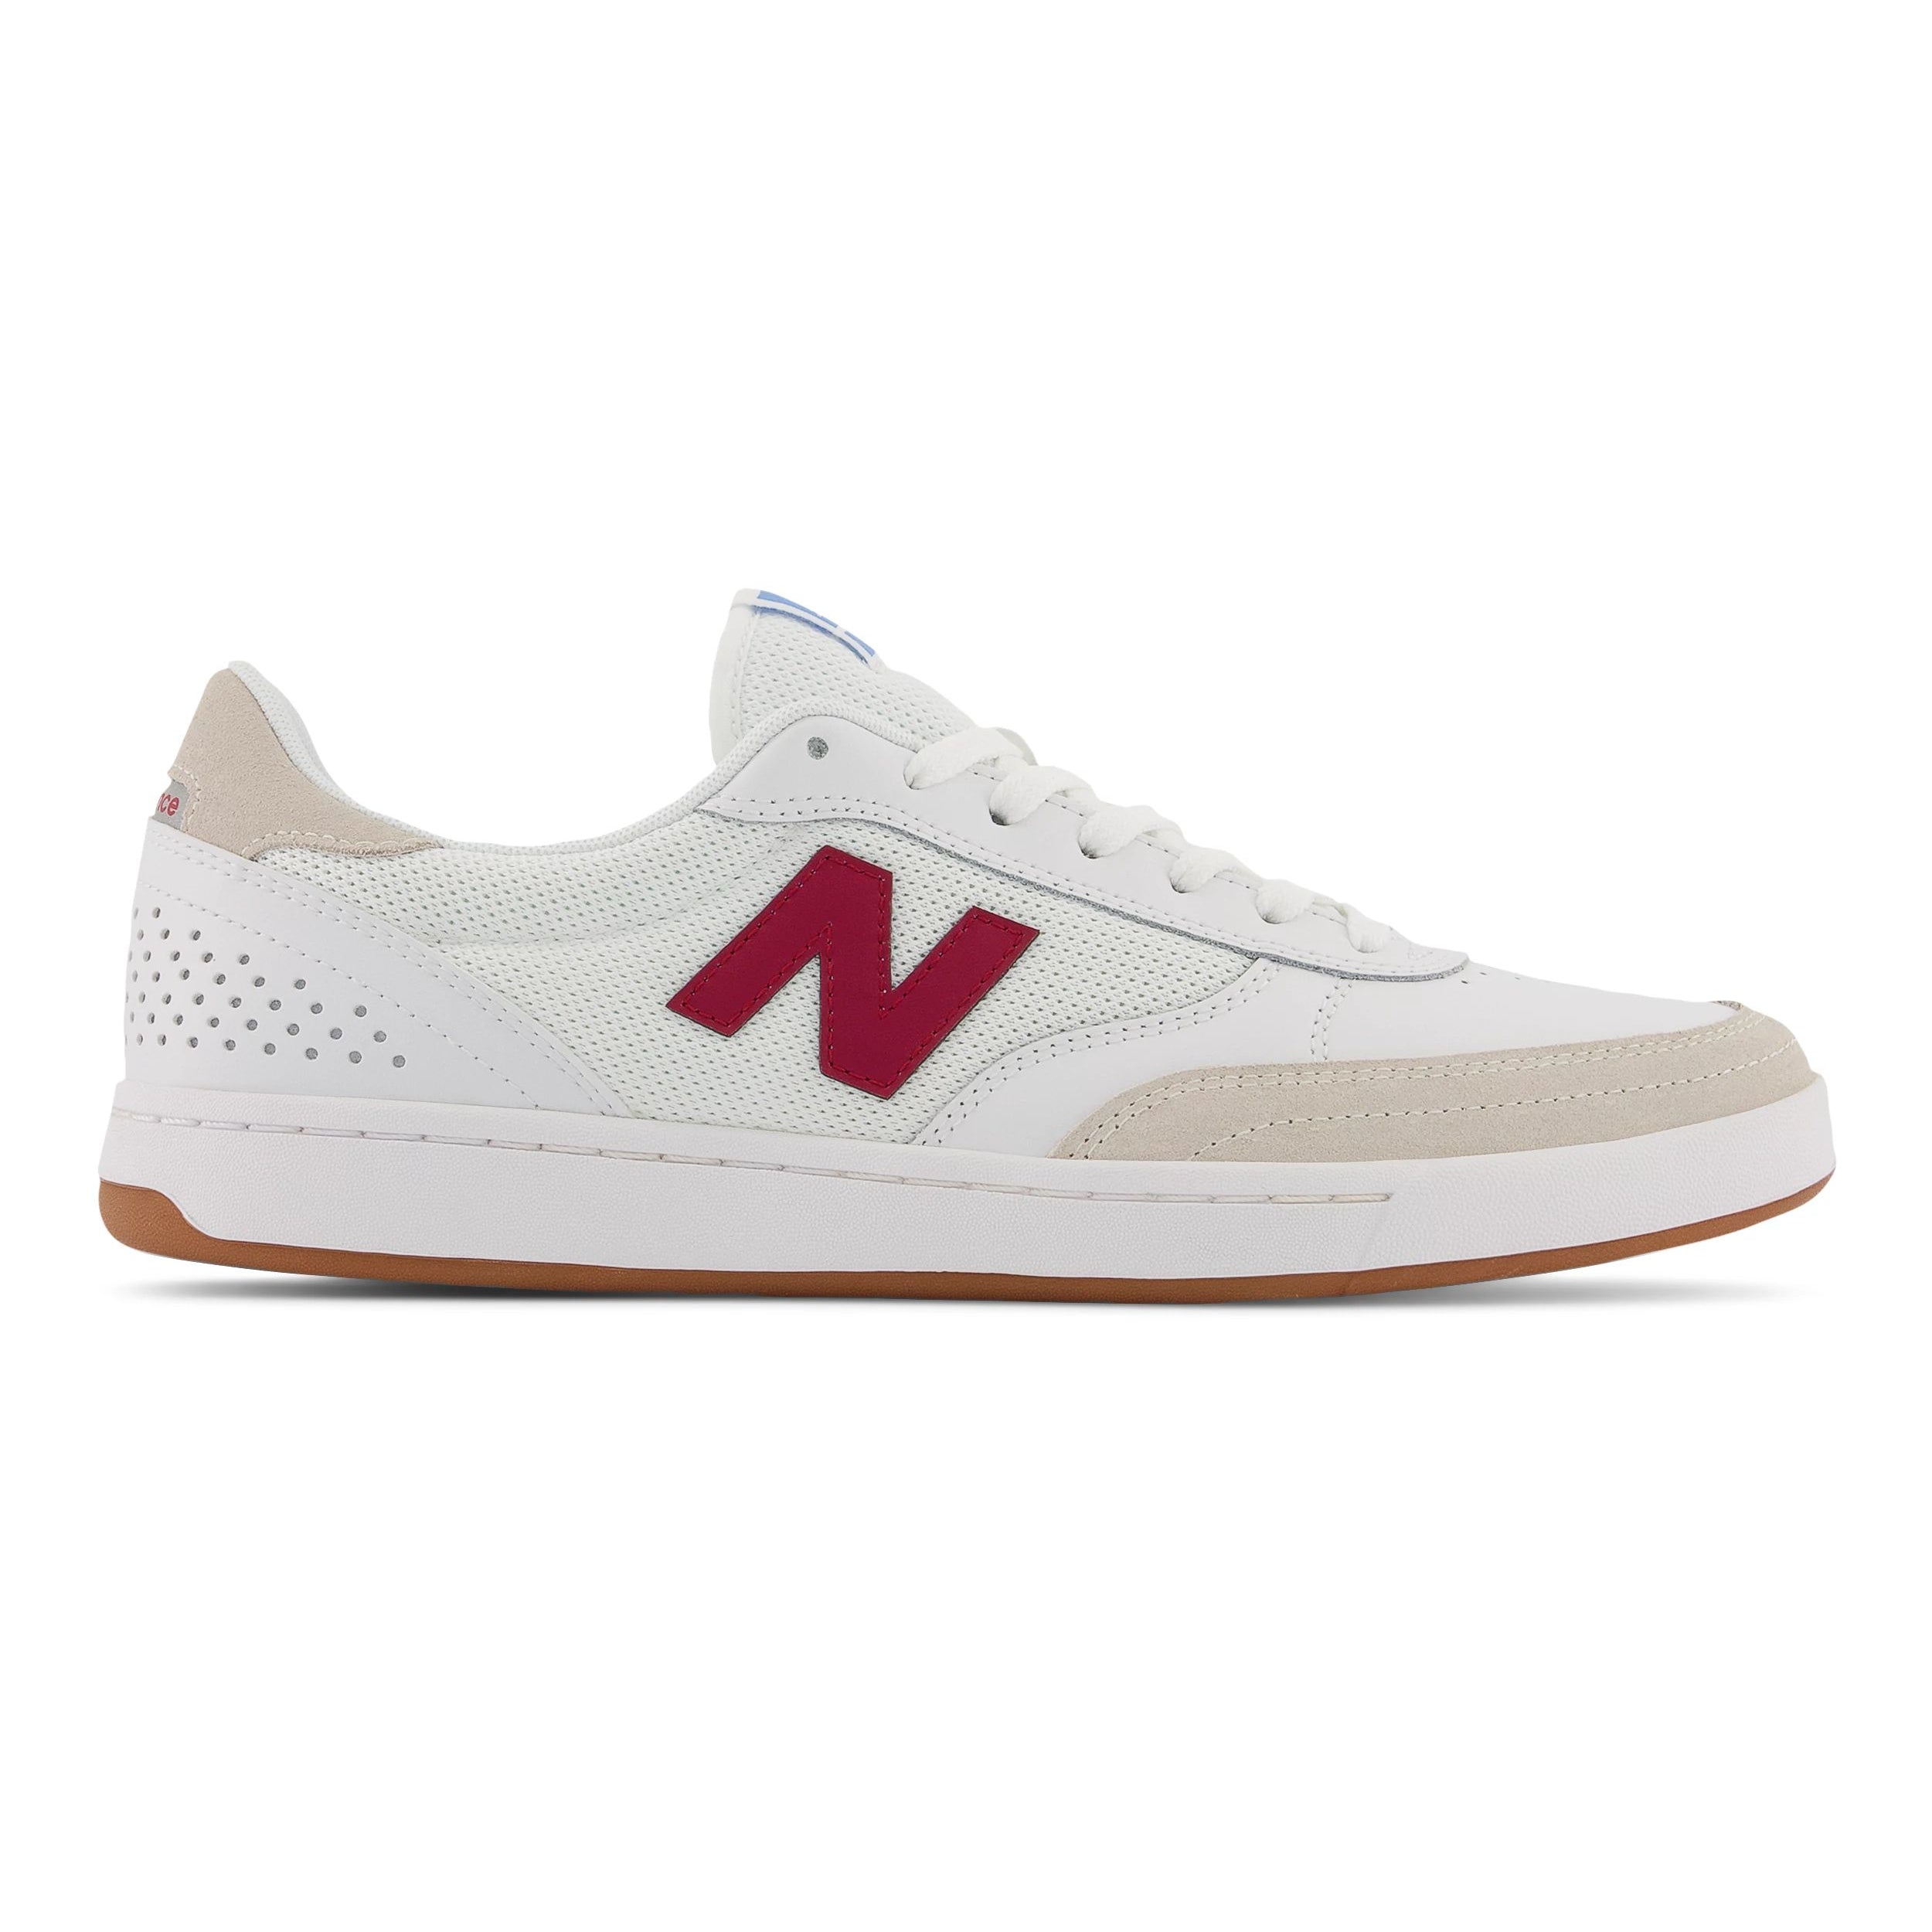 White/Red NM440 NB Numeric Skateboard Shoe